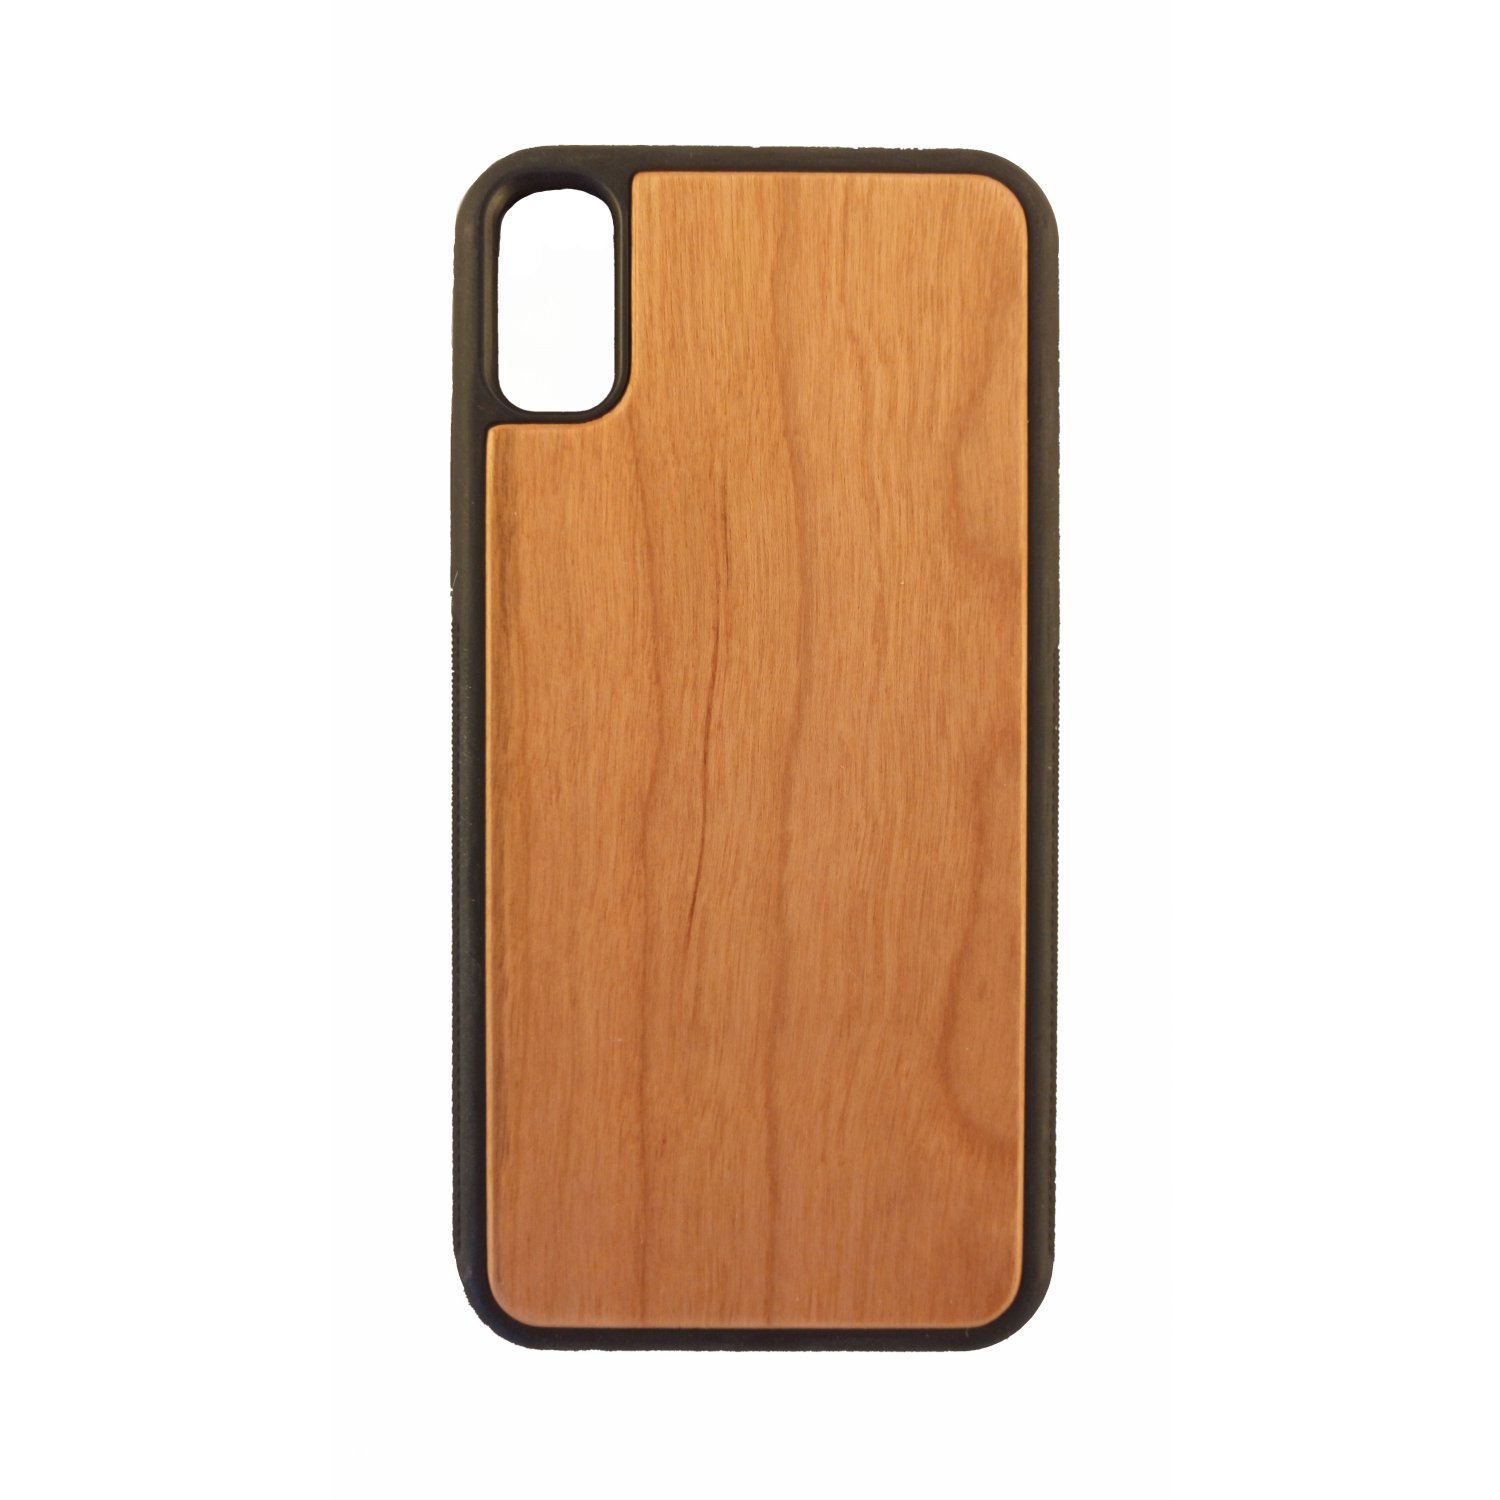 Wooden case IPhoneX cherry wood